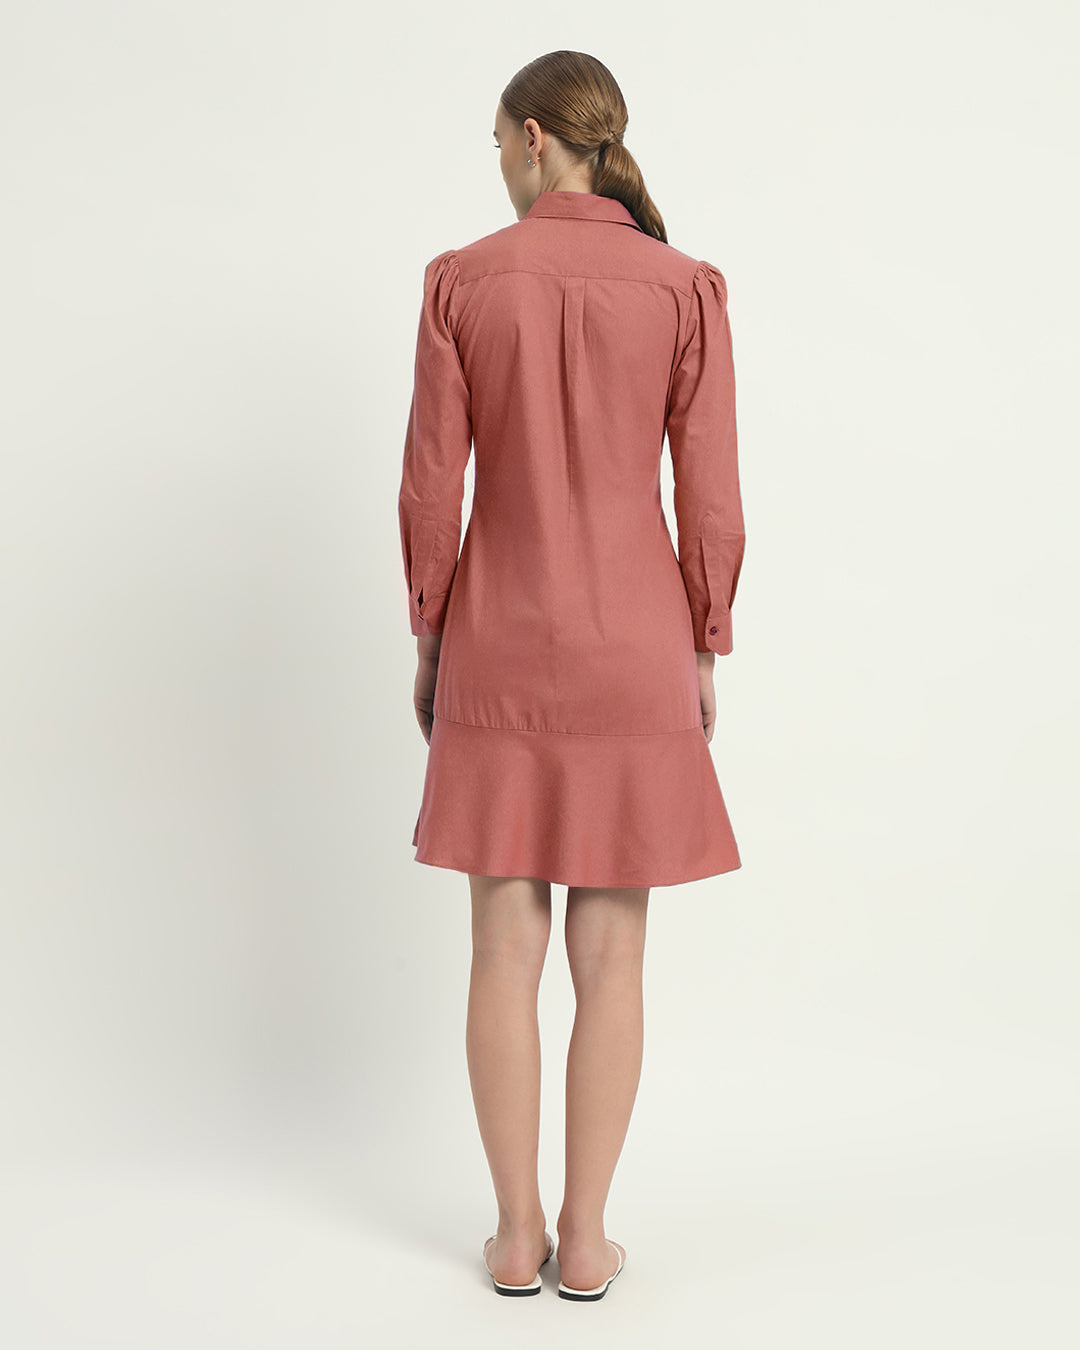 The Lyon Ivory Pink Cotton Dress